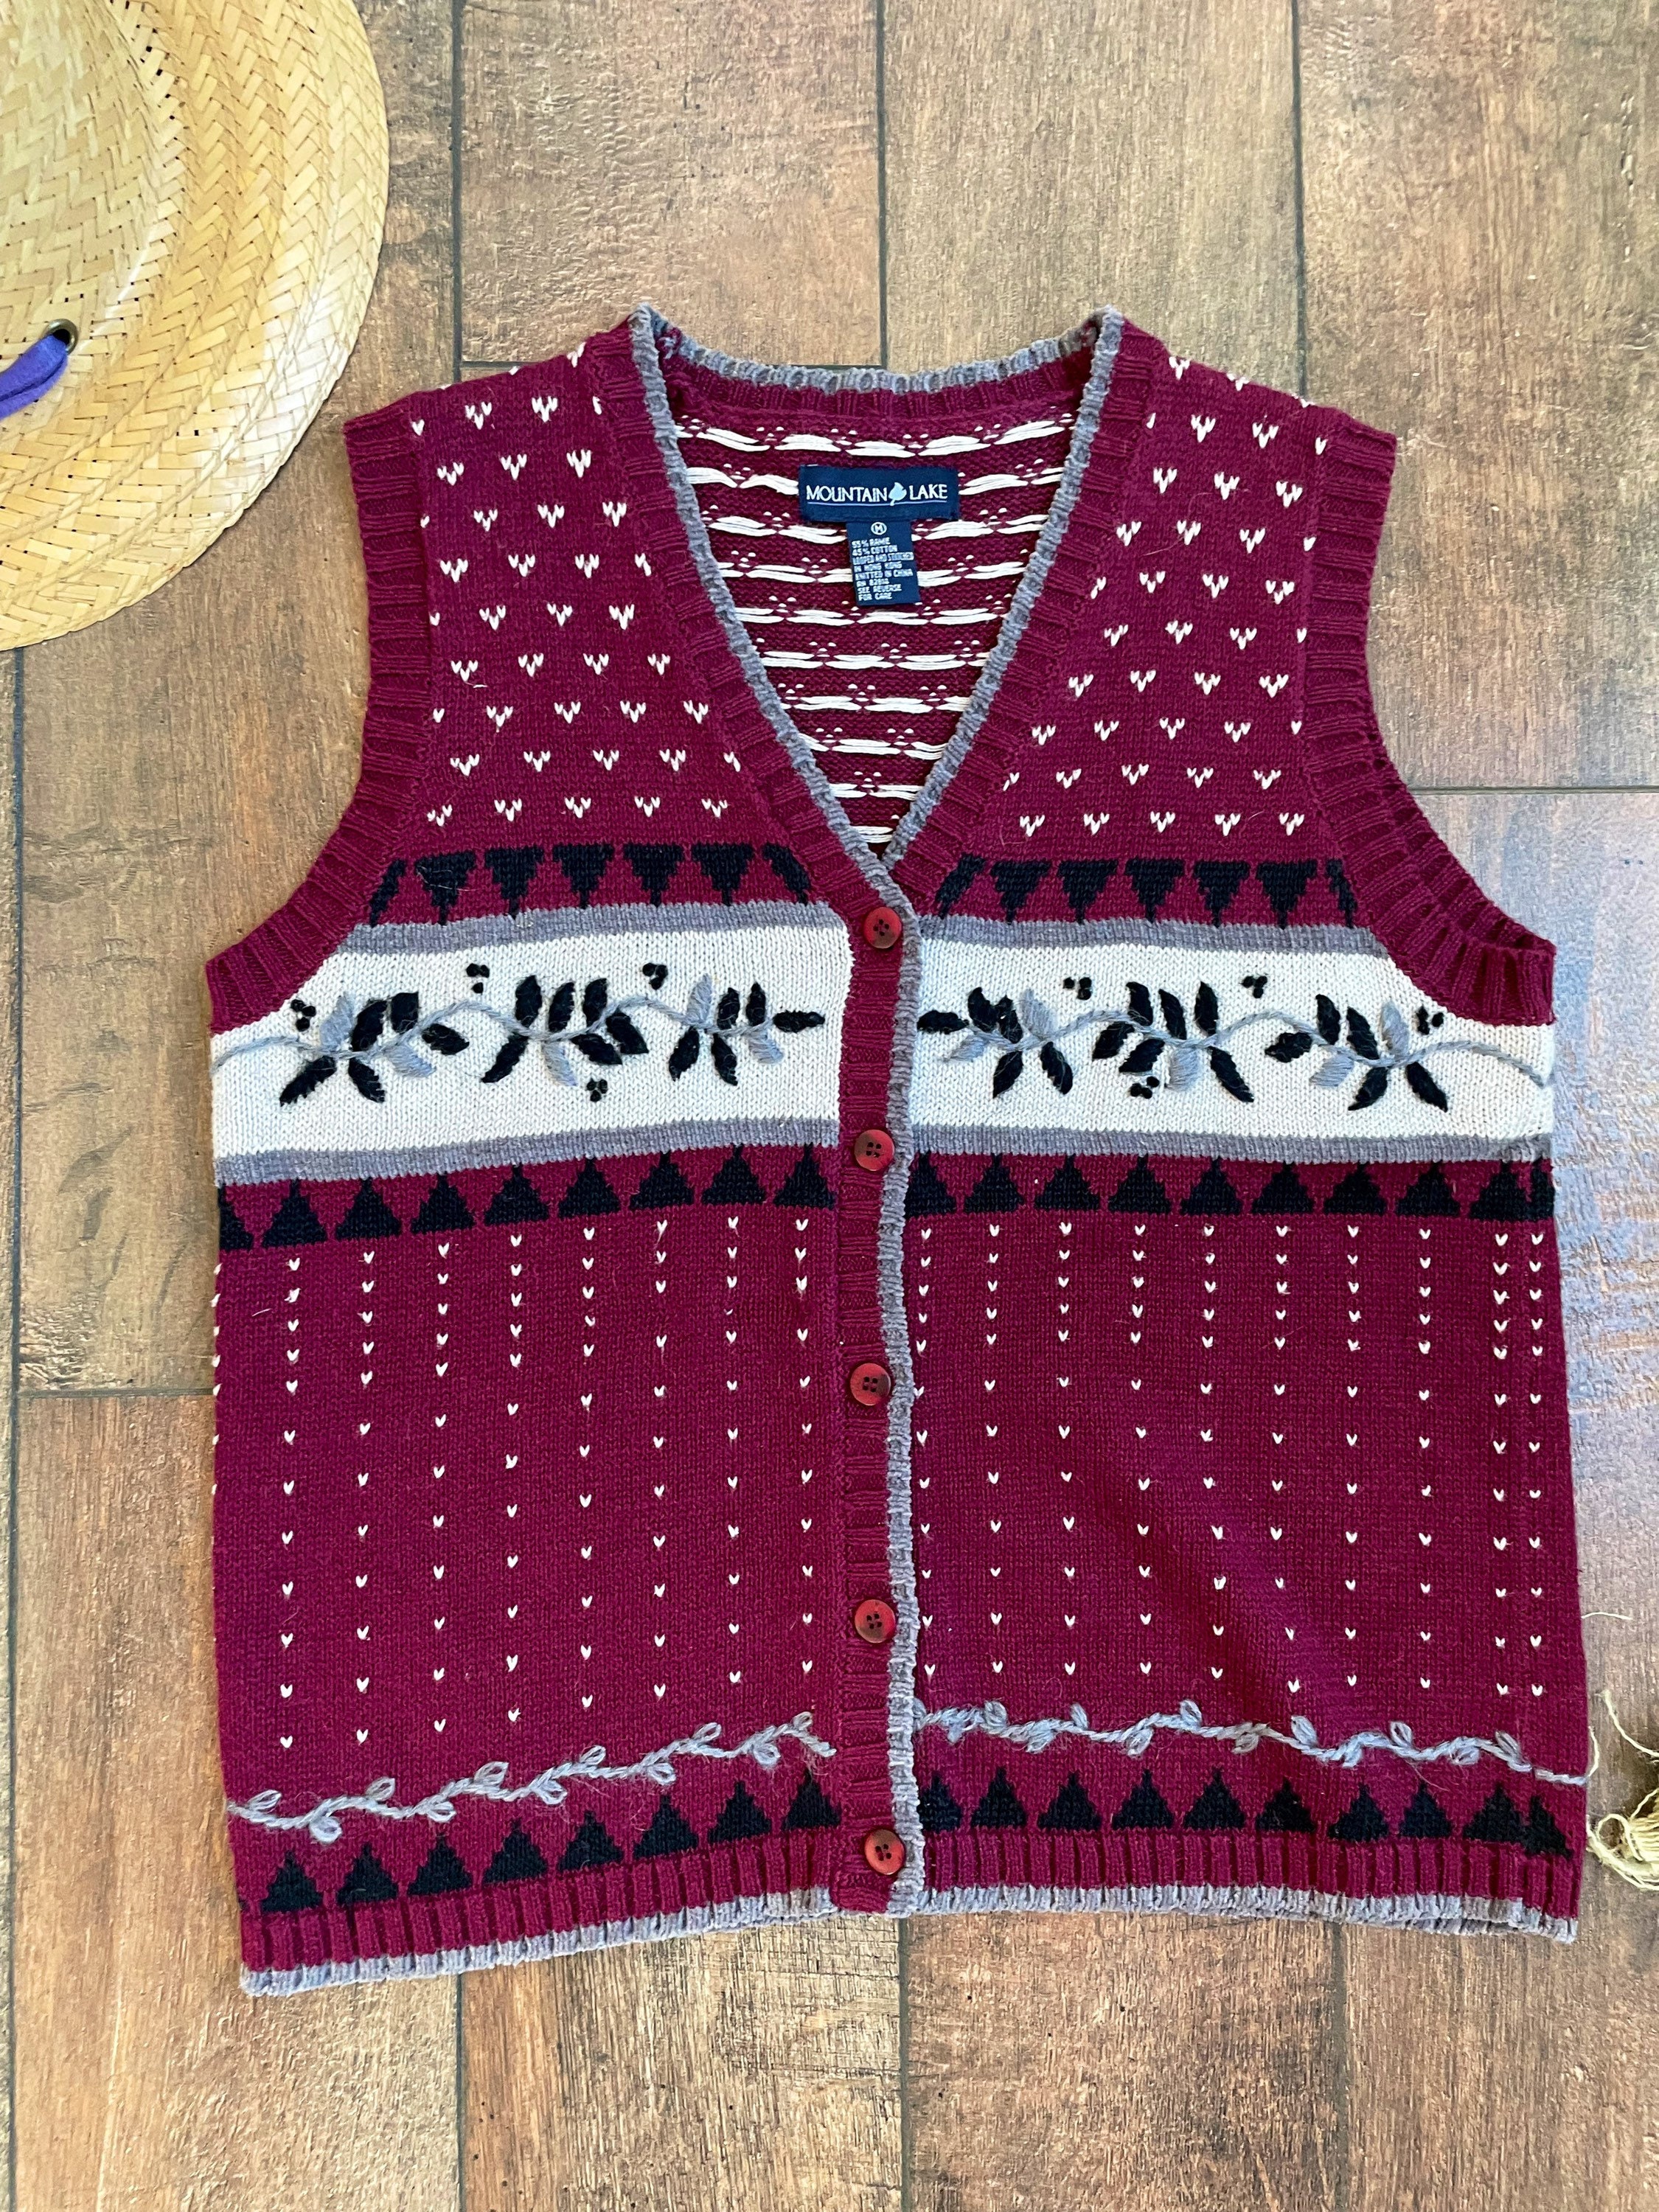 Vintage Fair Isle Sweater Vest Vintage Heart Stitch Sweater - Etsy